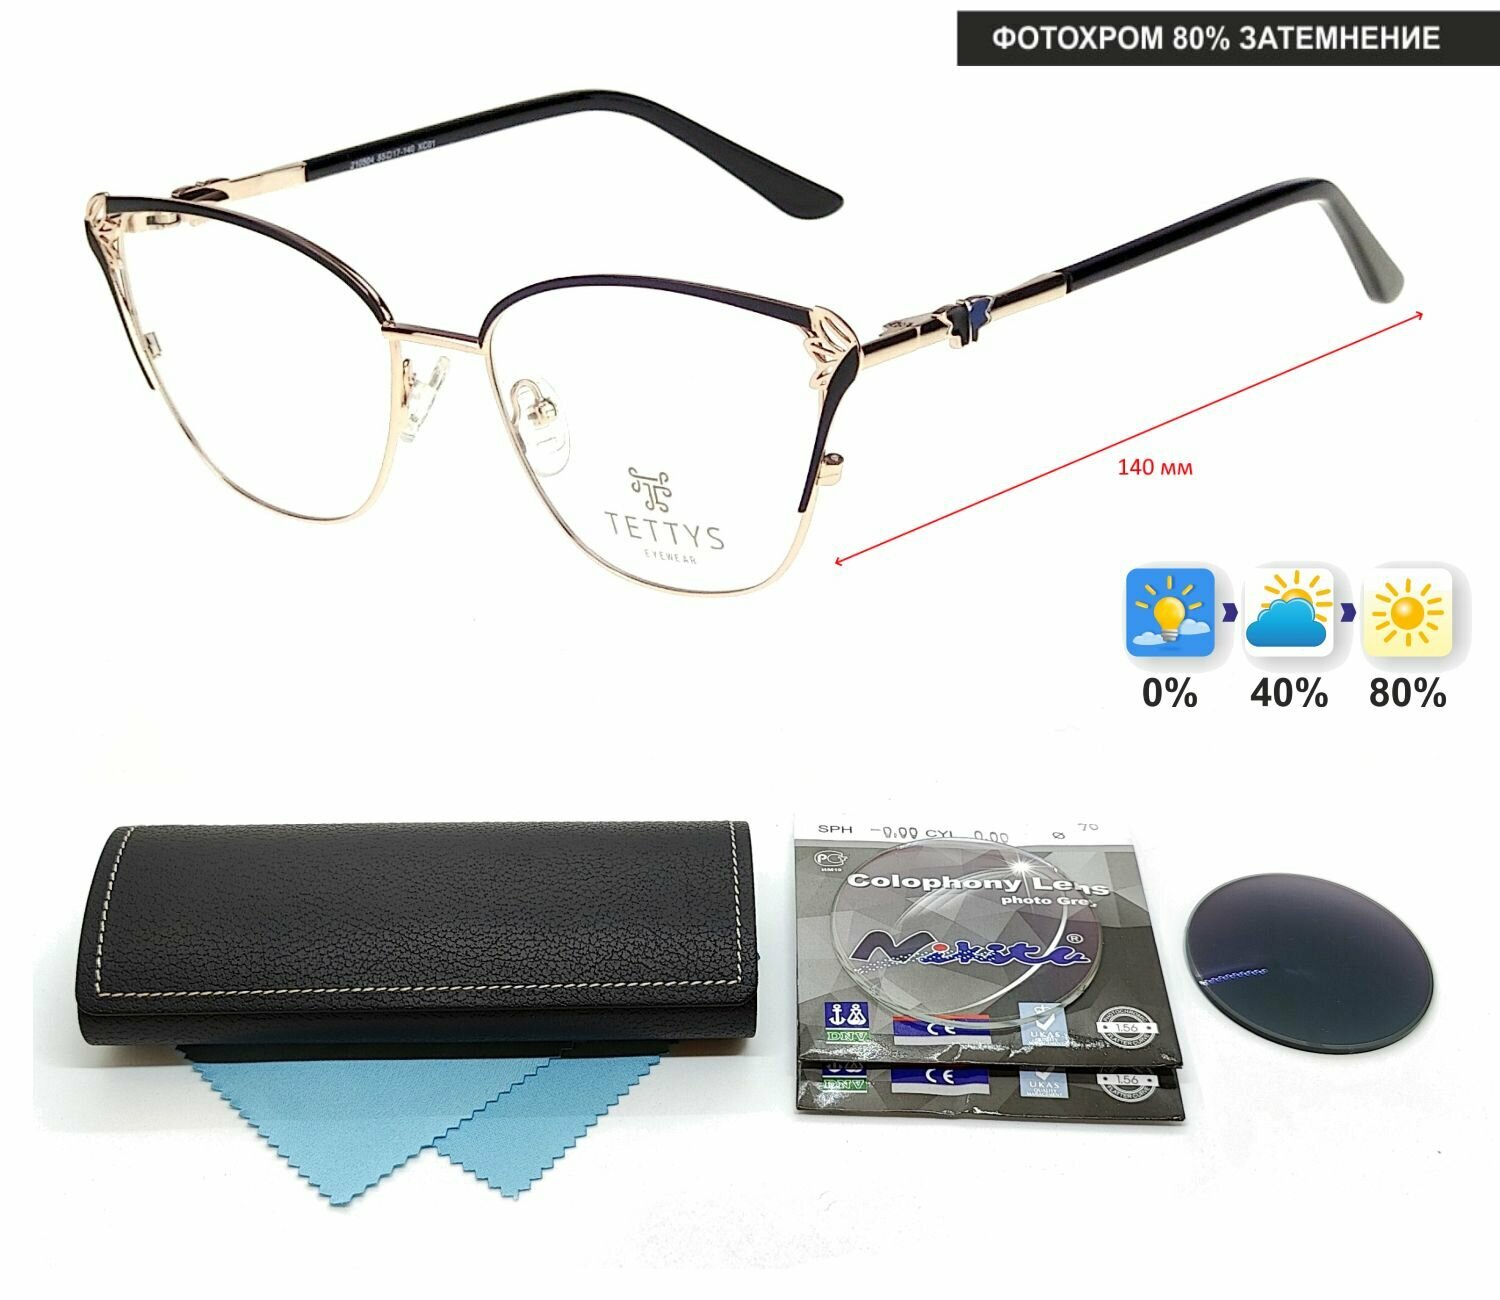 Фотохромные очки с футляром на магните TETTYS EYEWEAR мод. 210504 Цвет 1 с линзами NIKITA 1.56 Colophony GRAY, HMC+ +1.50 РЦ 64-66